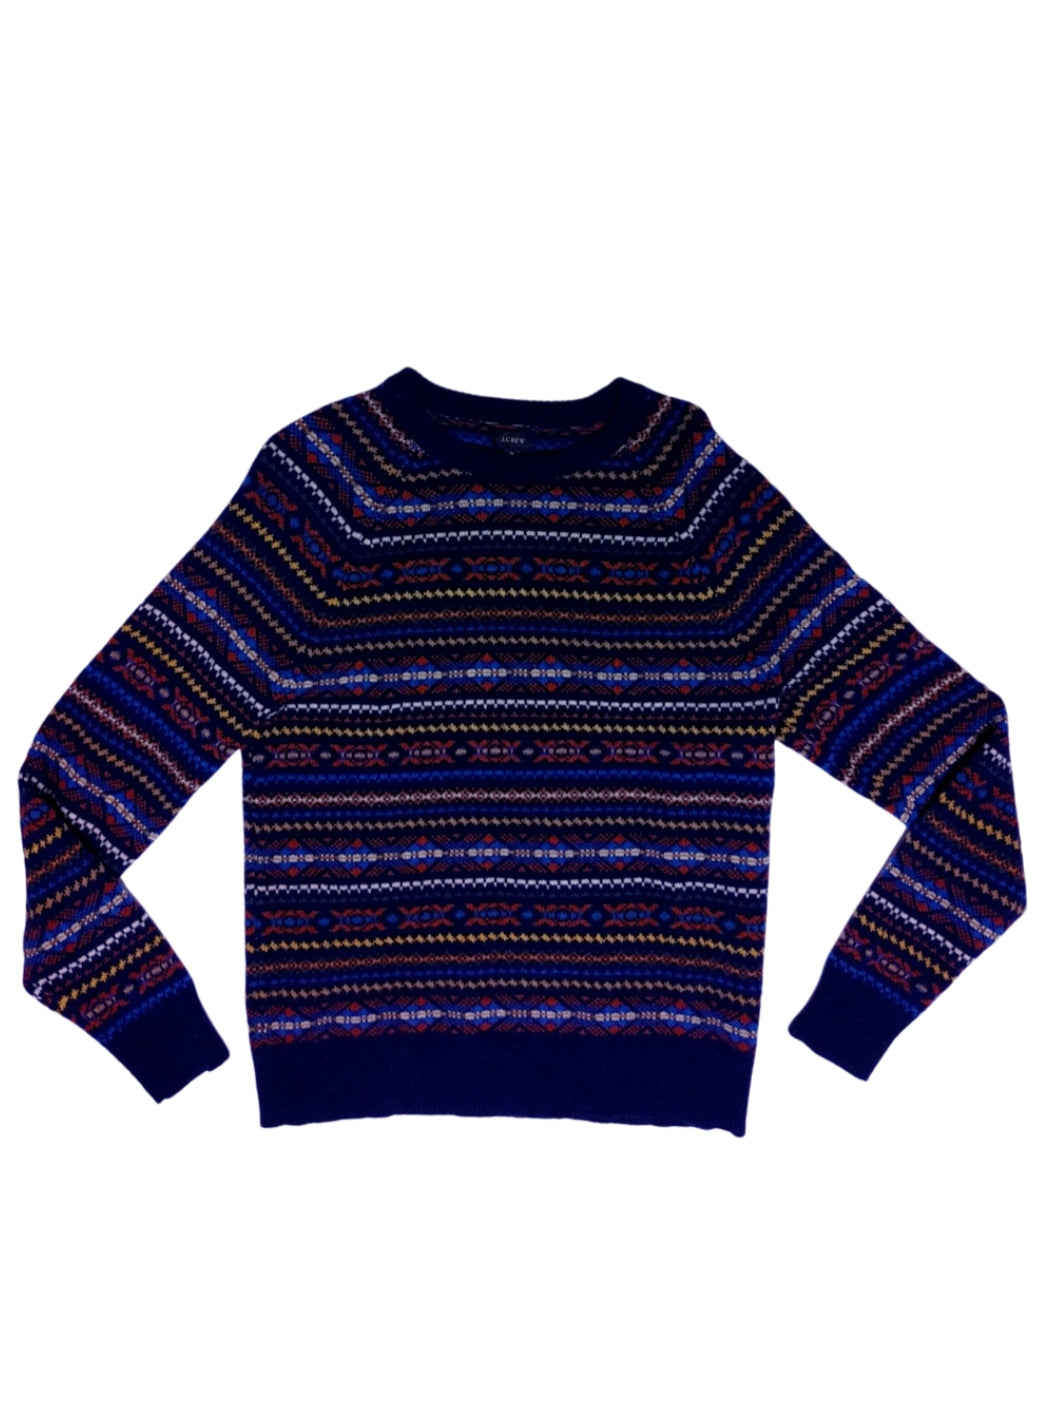 90s J.Crew Knit Sweater - Size M